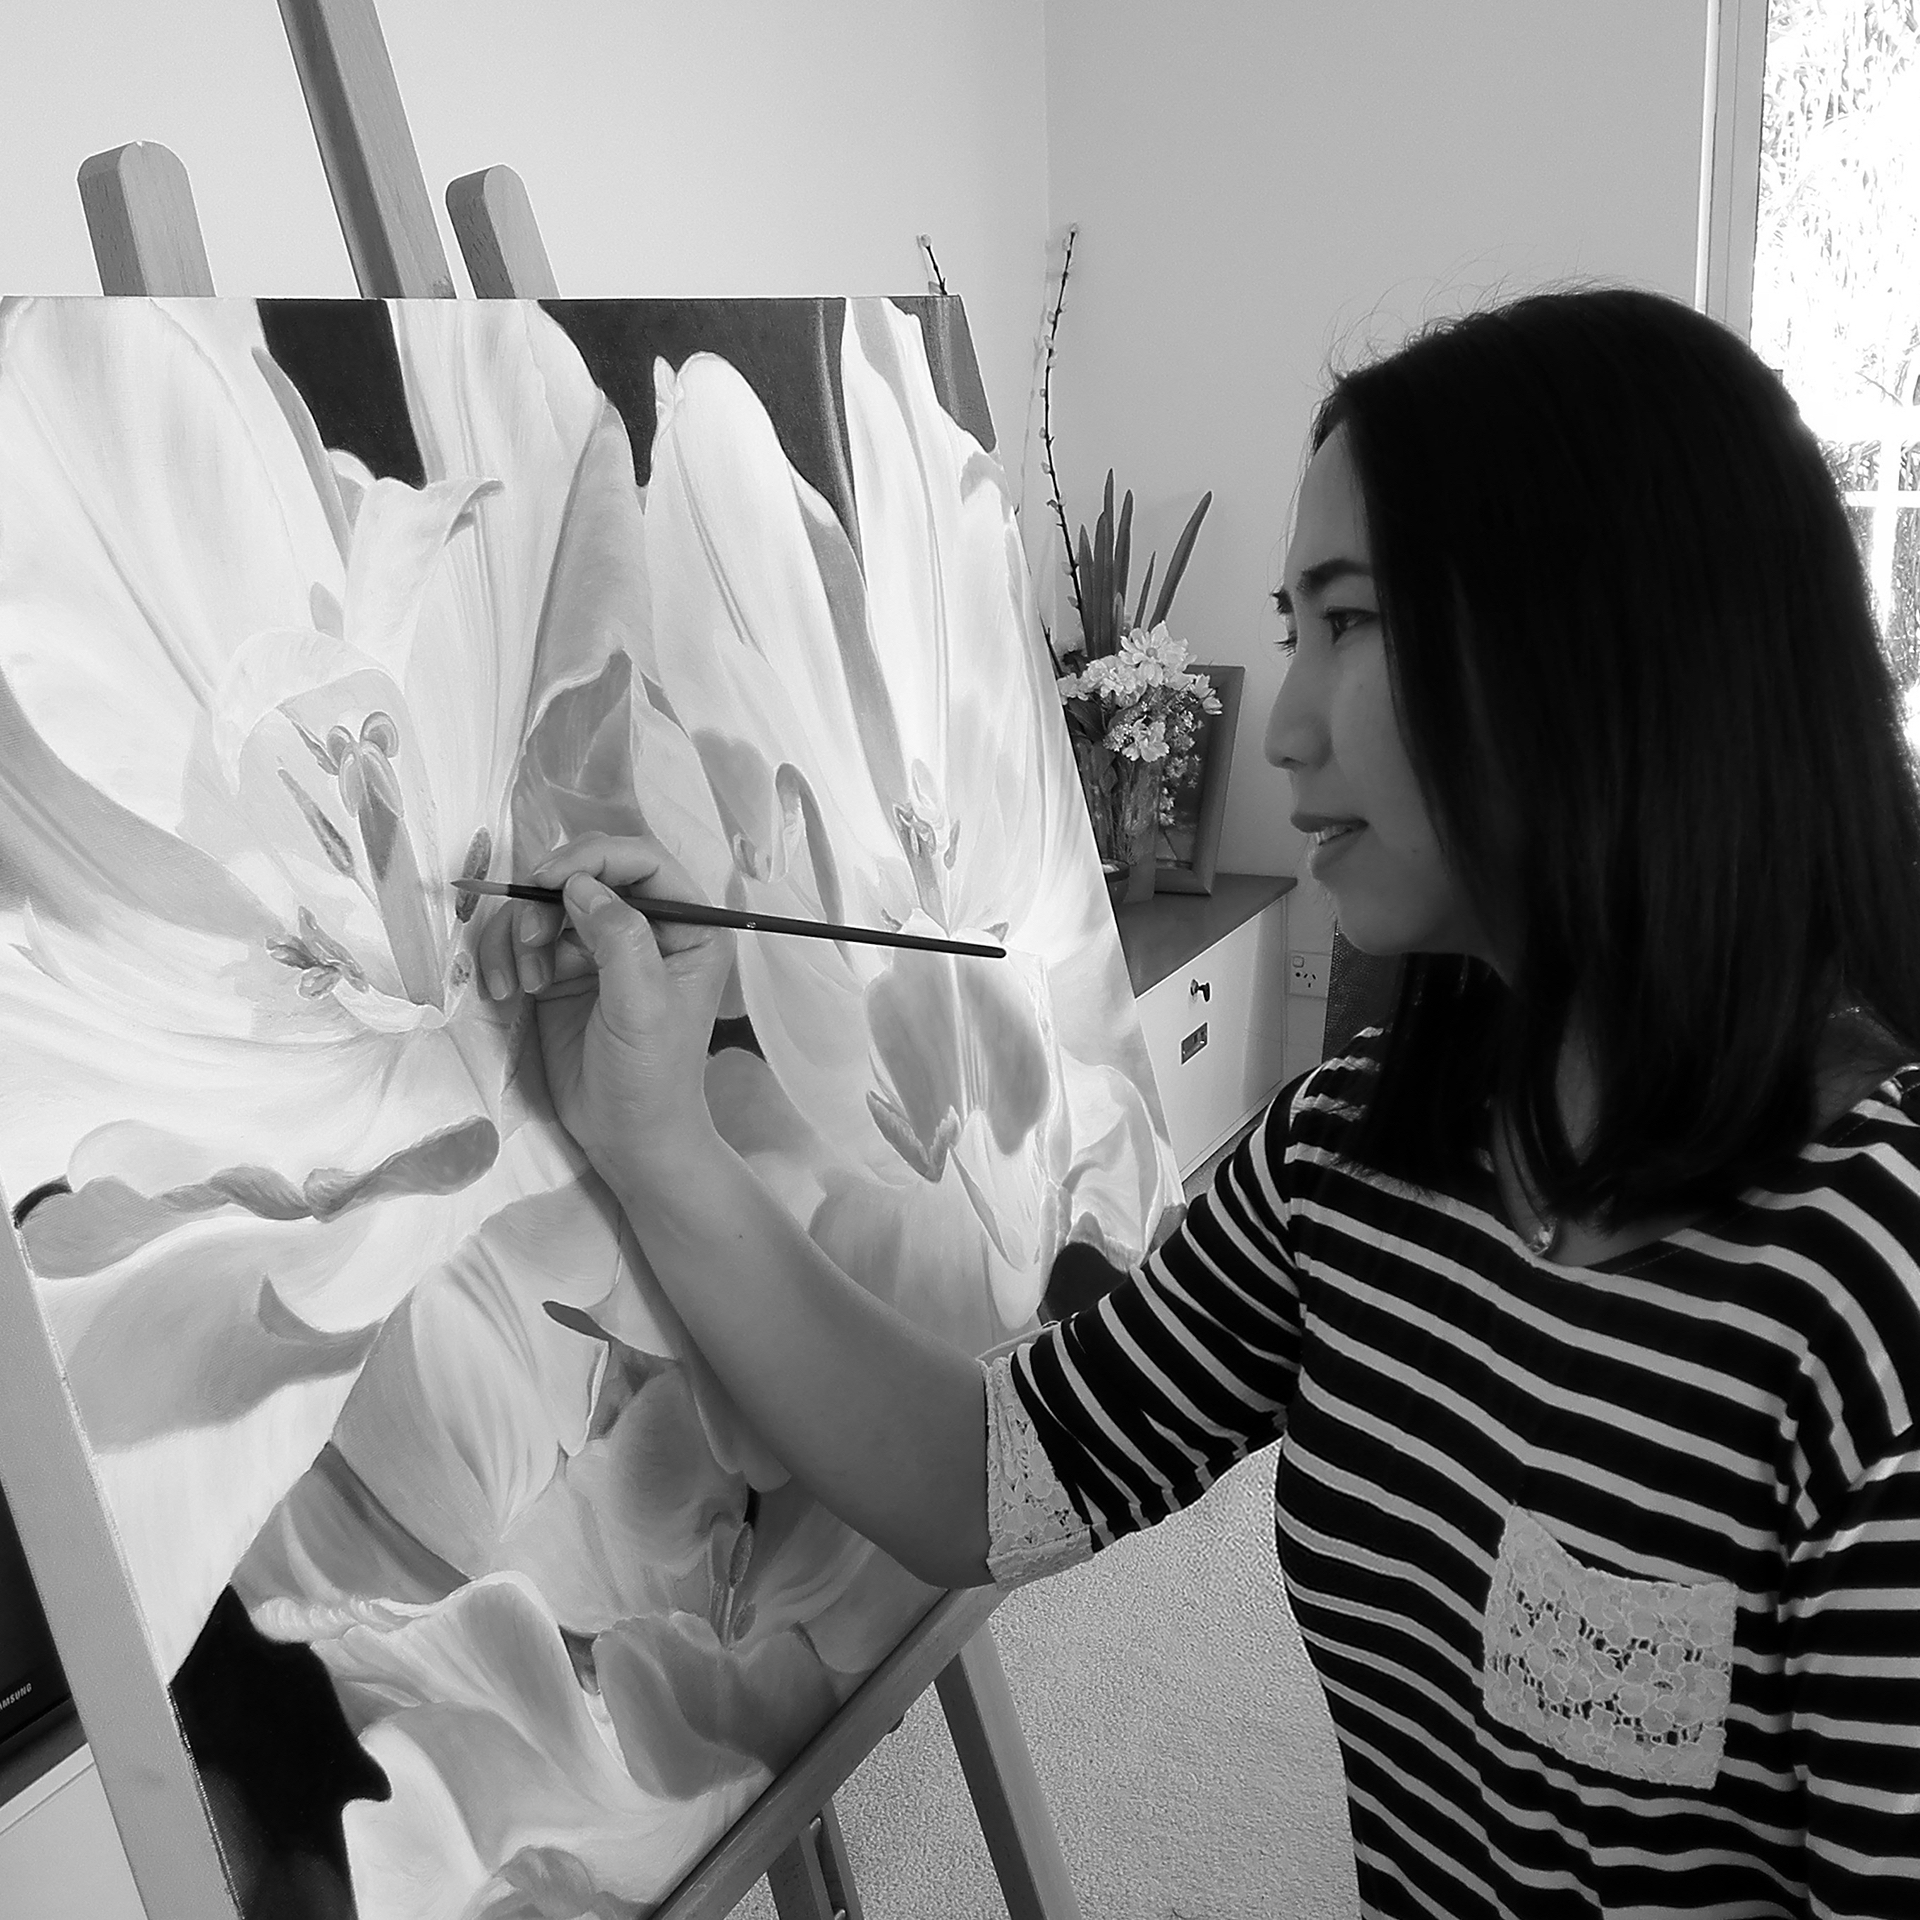 Local Sydney artist Natasha Junmanee at work on a painting